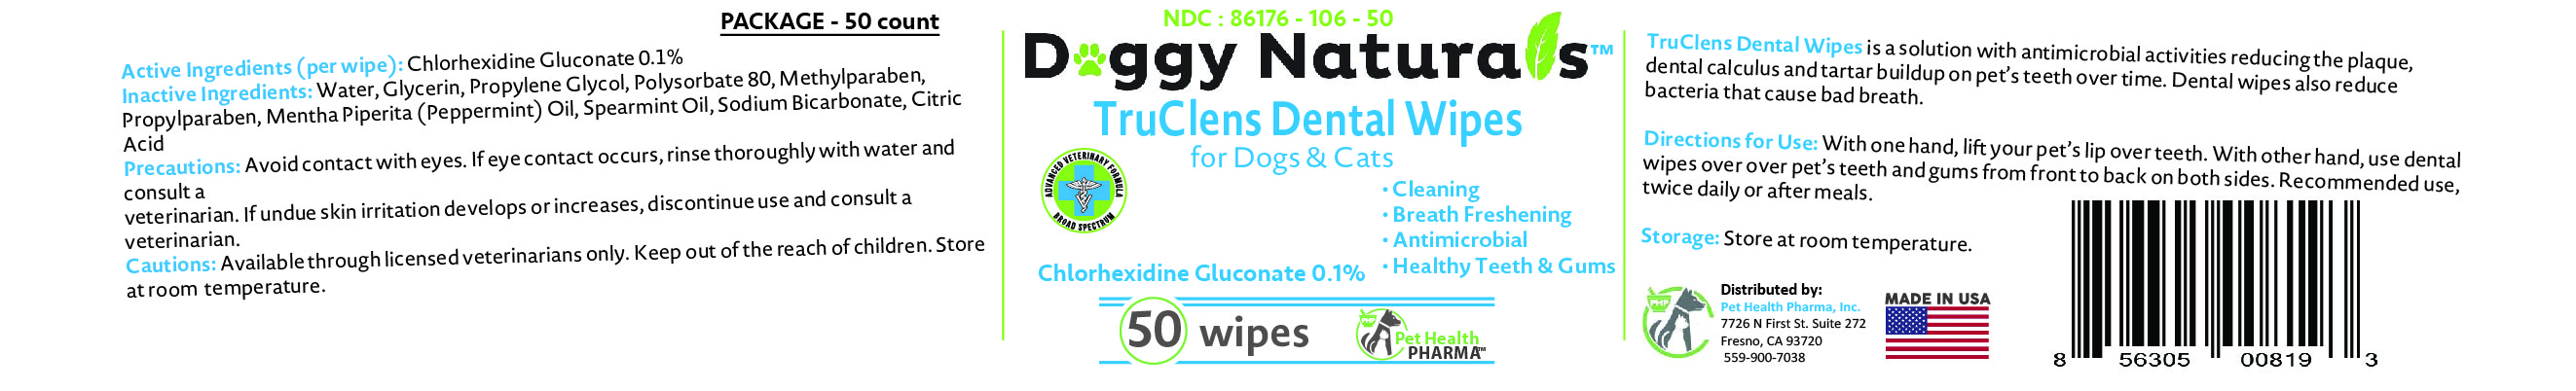 TruClens Dental Wipes